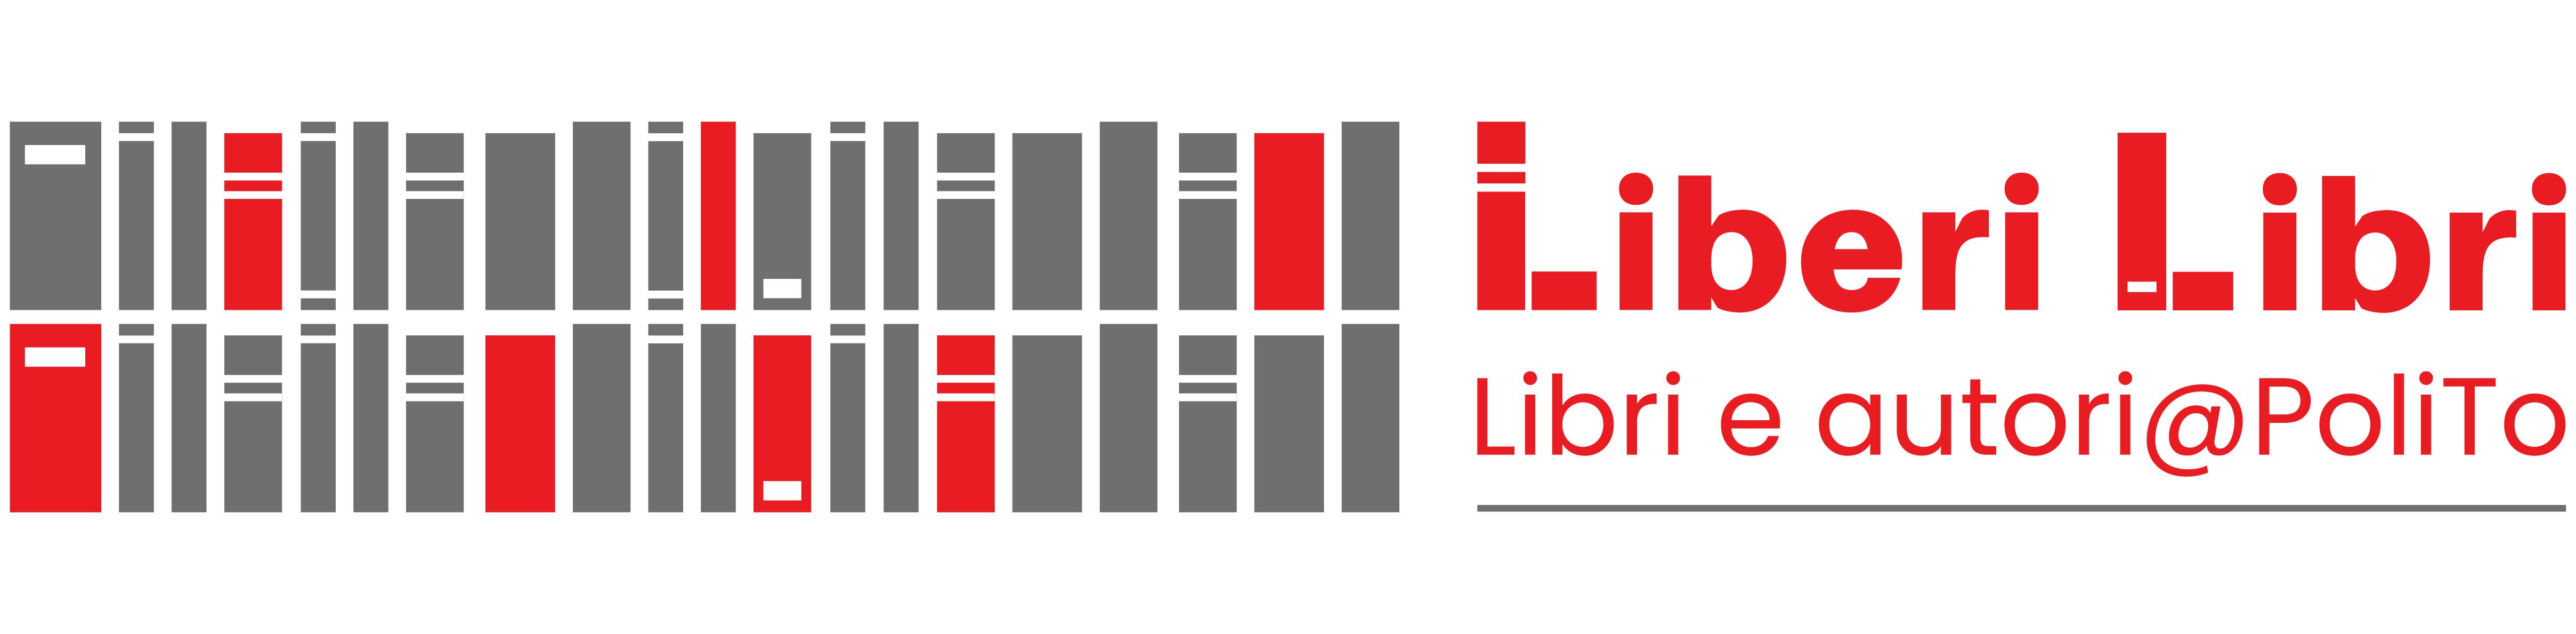 Liberi Libri banner